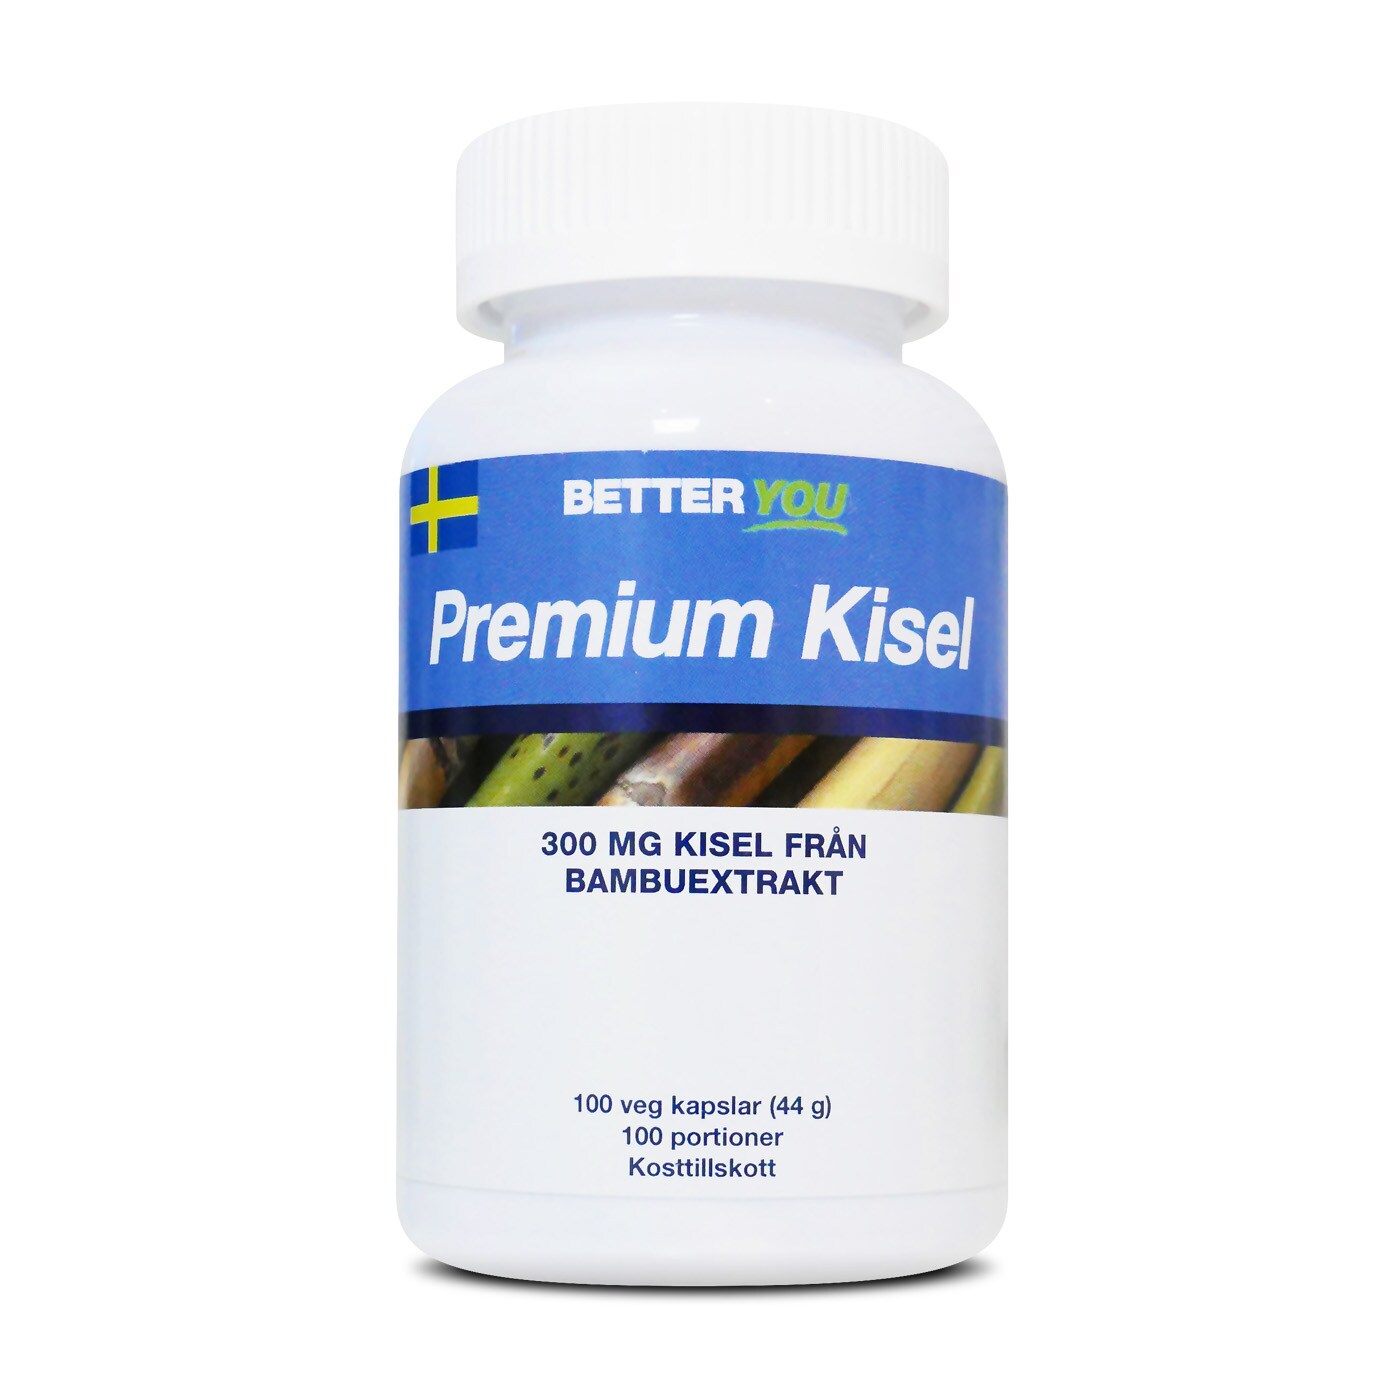 Premium Kisel